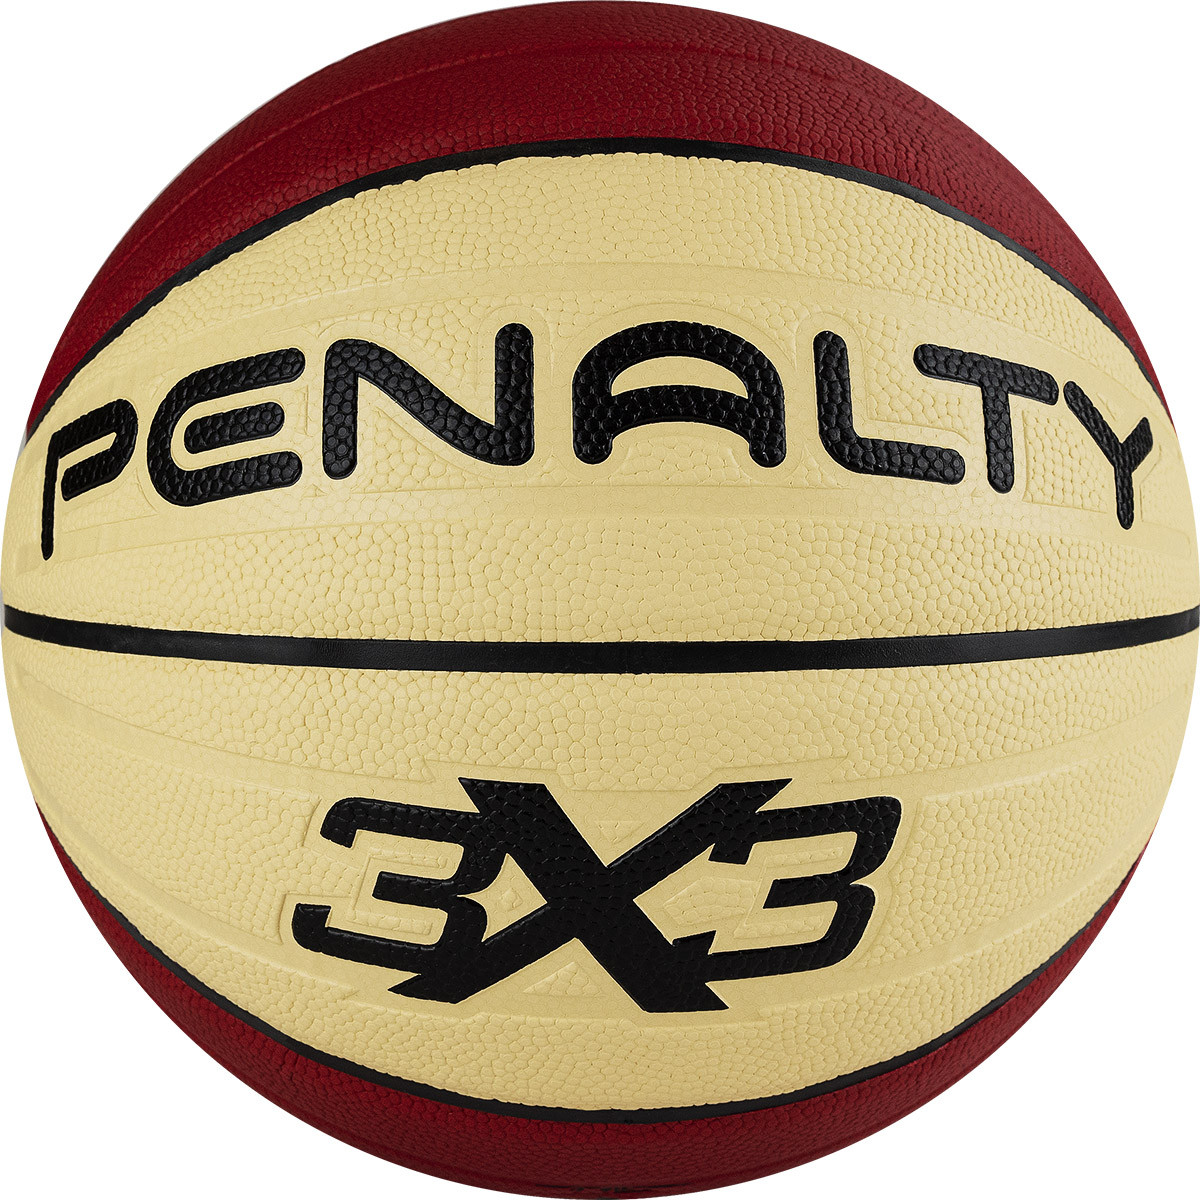 Мяч для стритбола PENALTY BOLA BASQUETE 3X3 PRO IX, размер 6, арт.5113134340